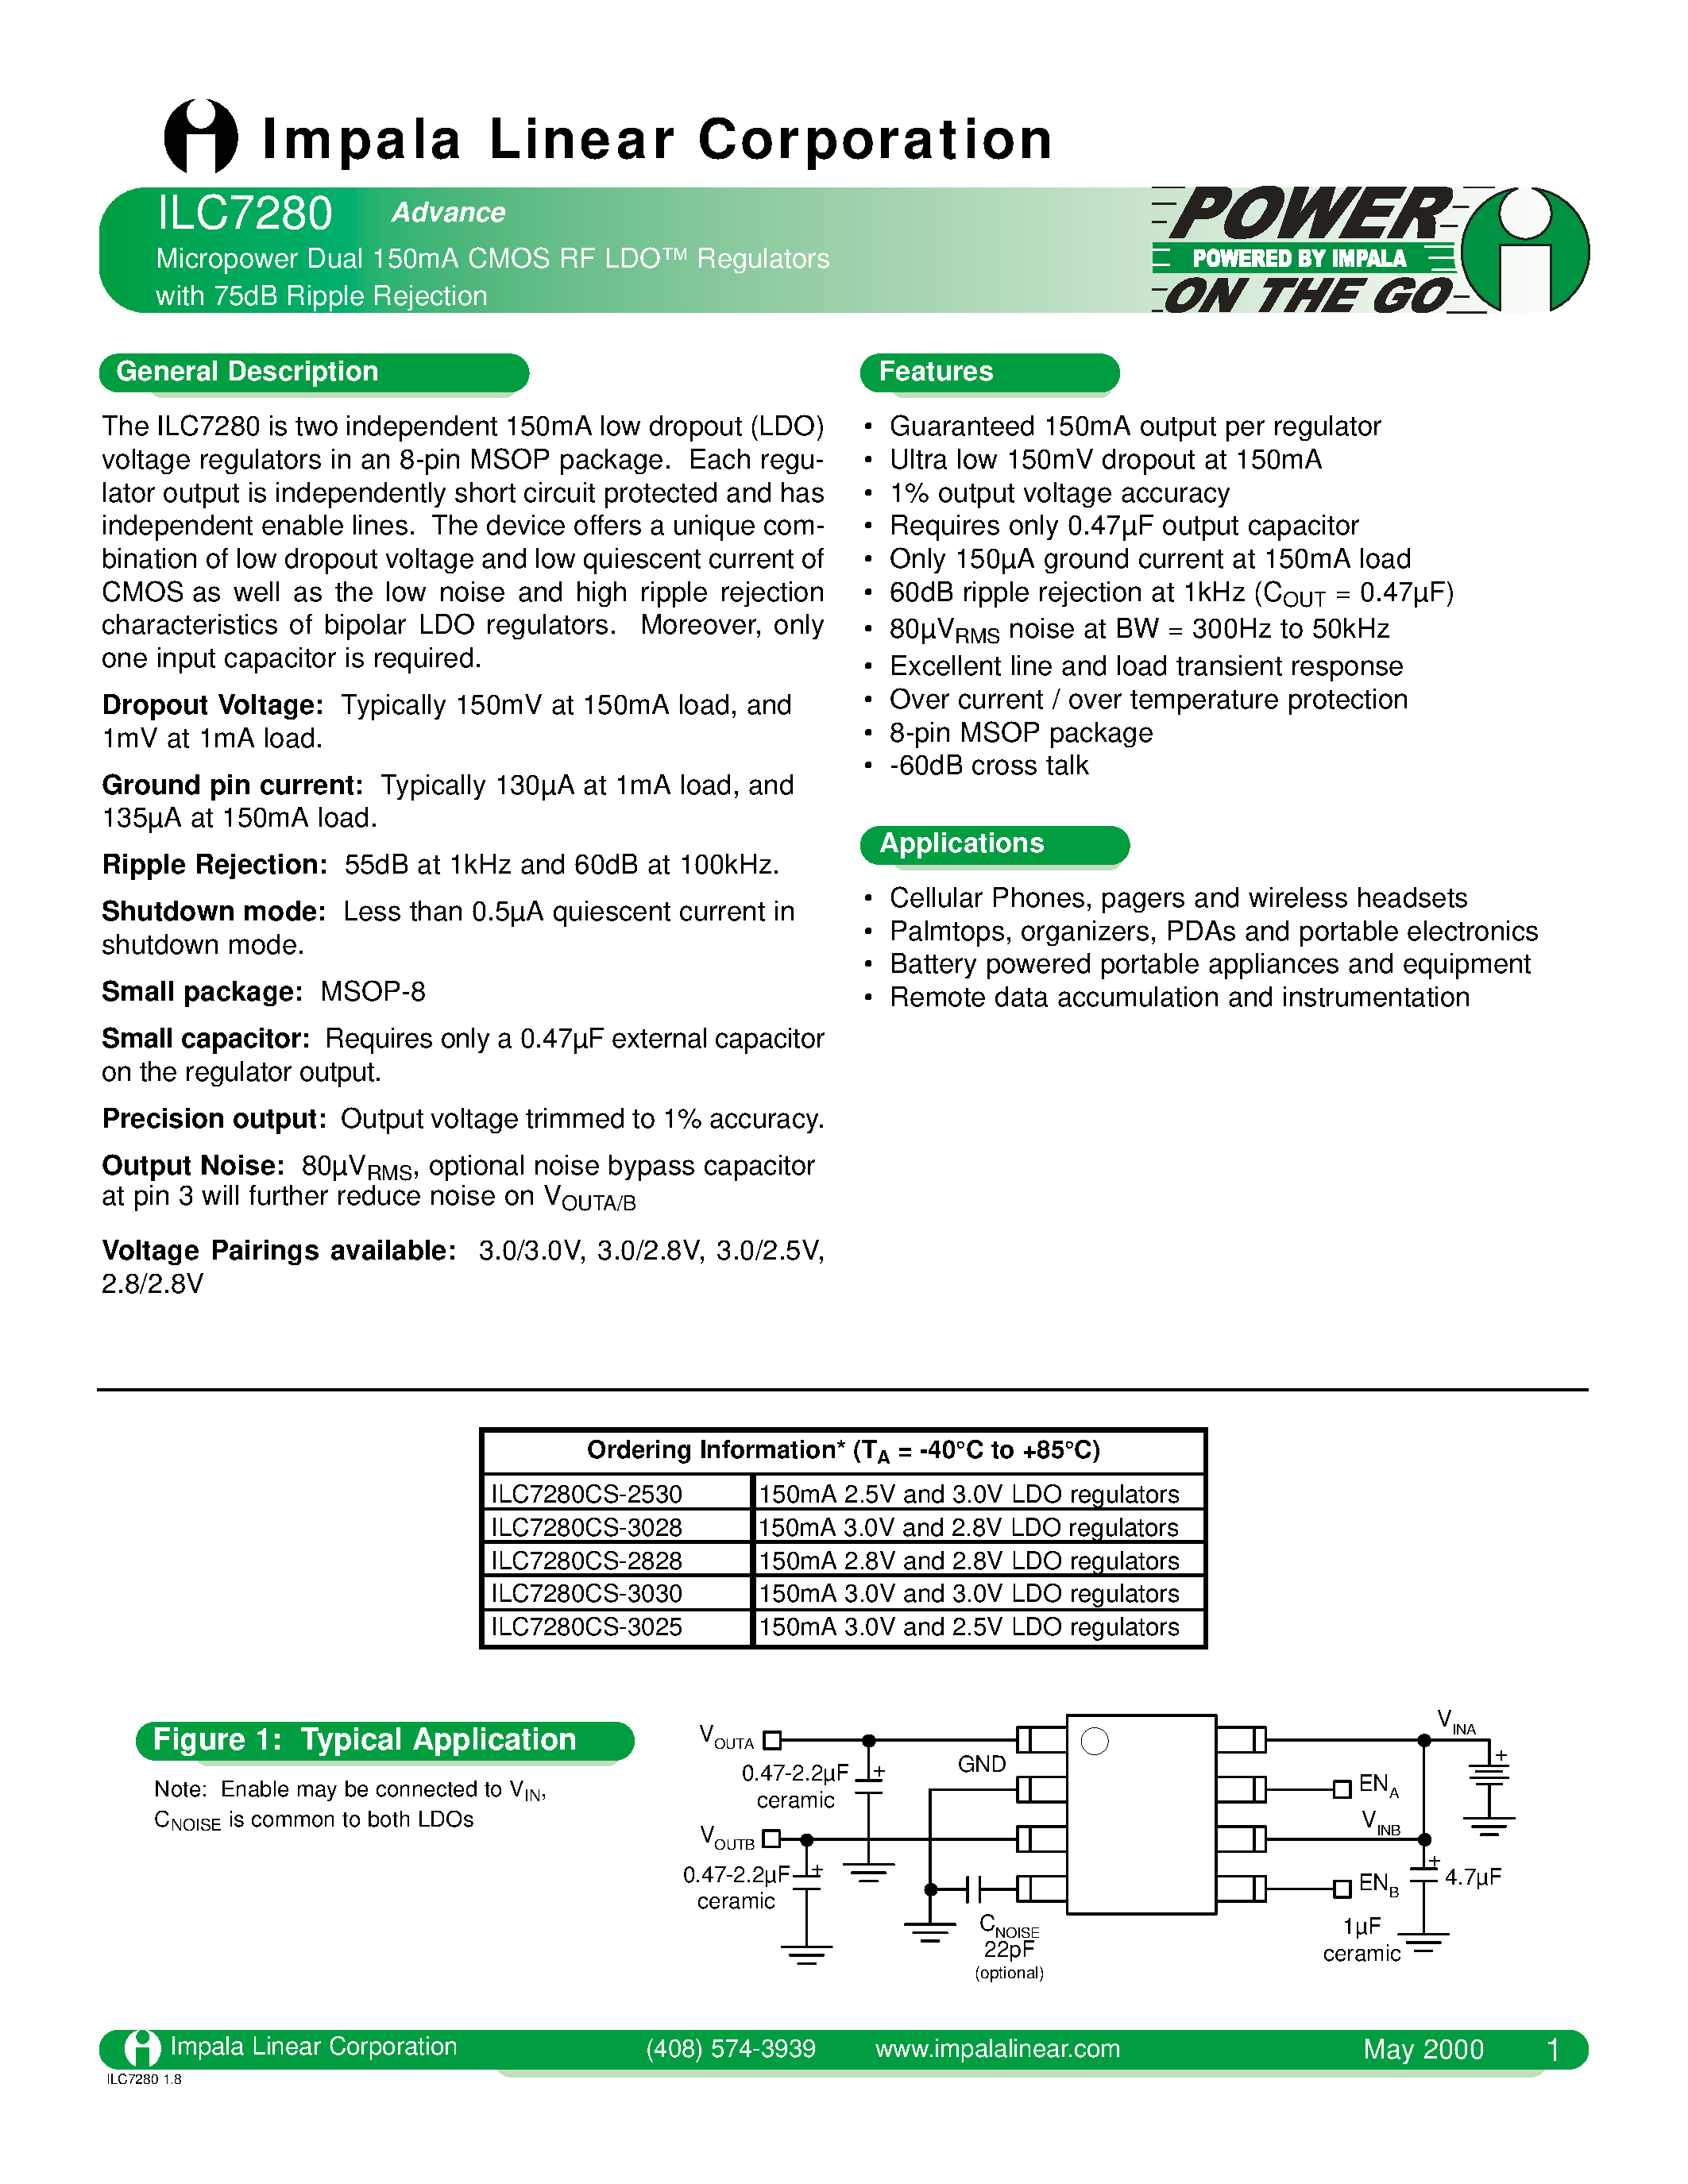 Даташит ILC7280CS-2530 - MICROPOWER DUAL 150MA CMOS RF LDO REGULATORS WITH 75DB RIPPLE REJECTION страница 1